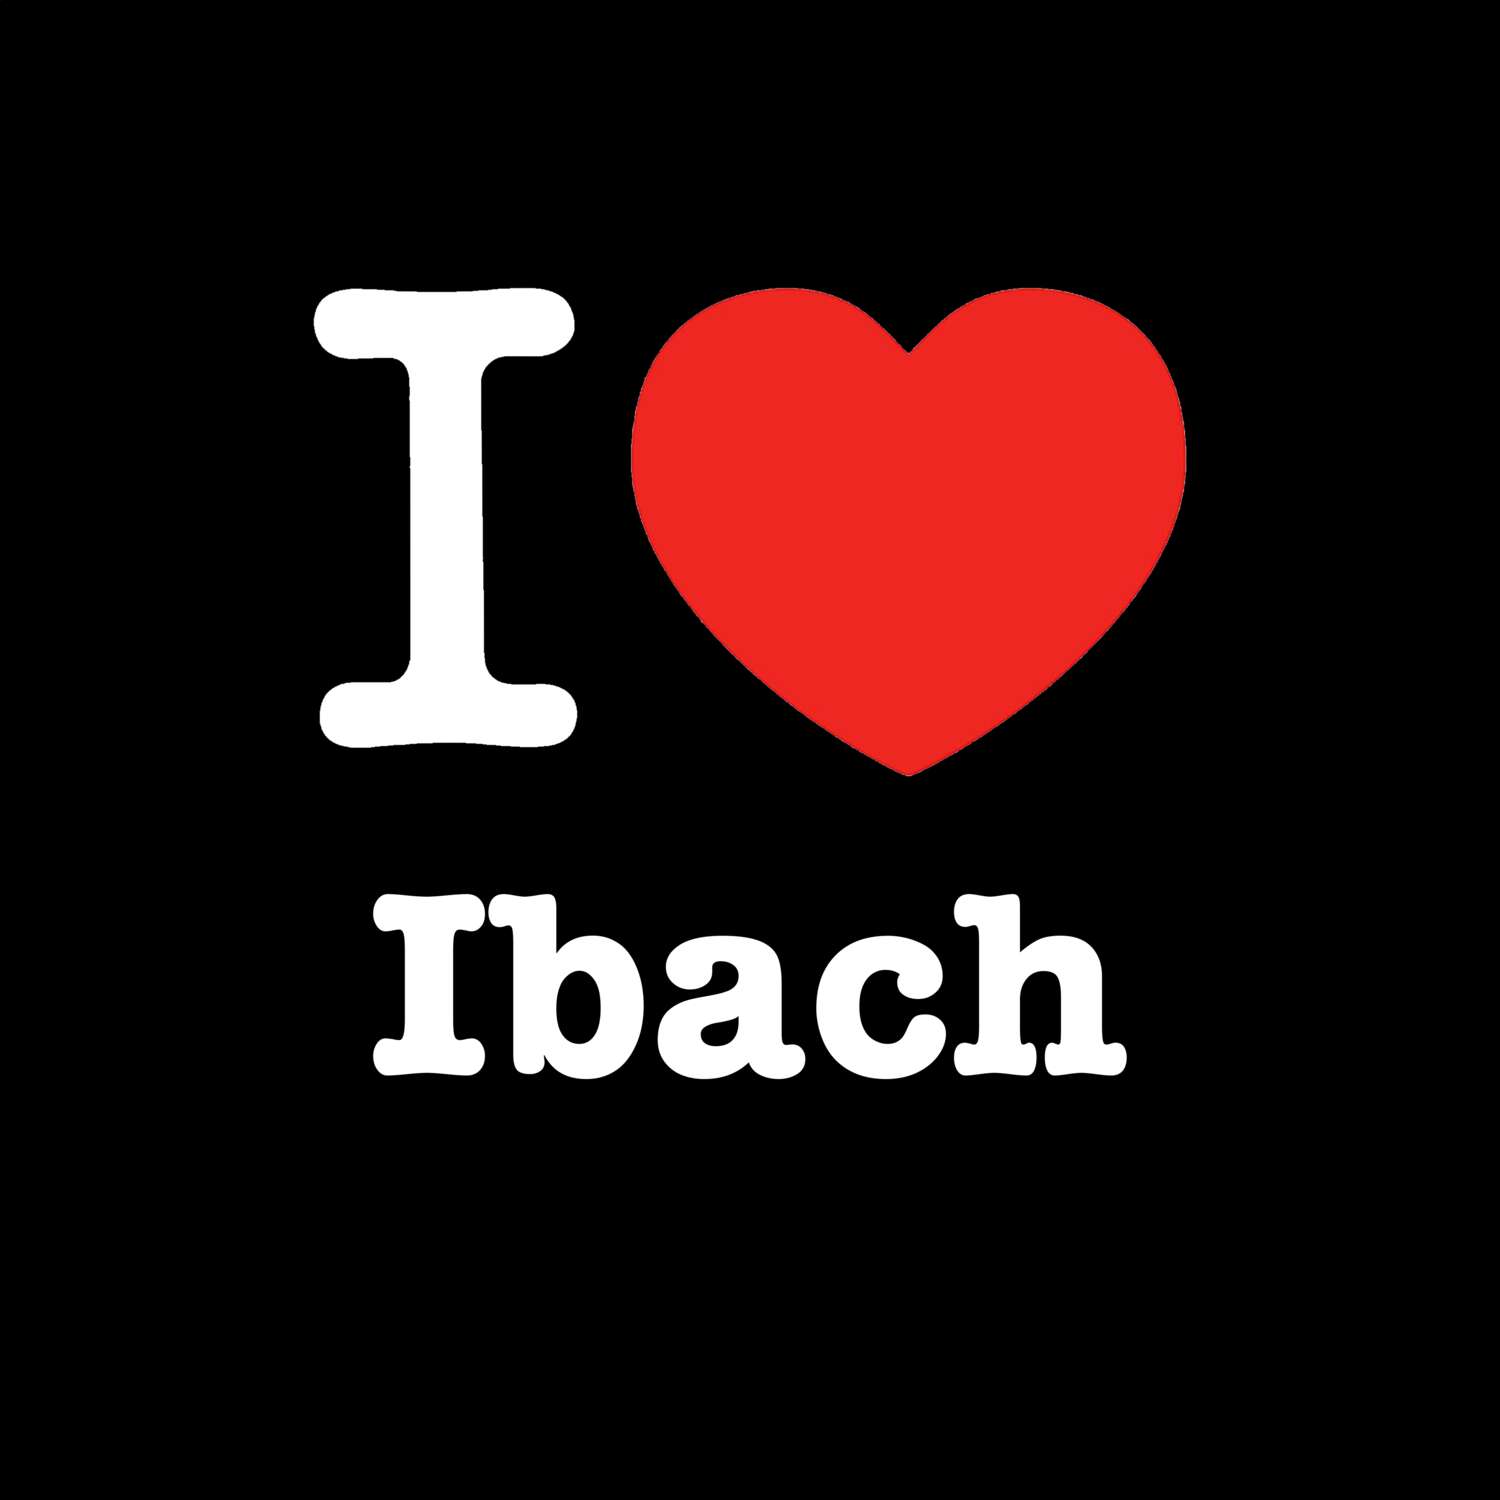 Ibach T-Shirt »I love«